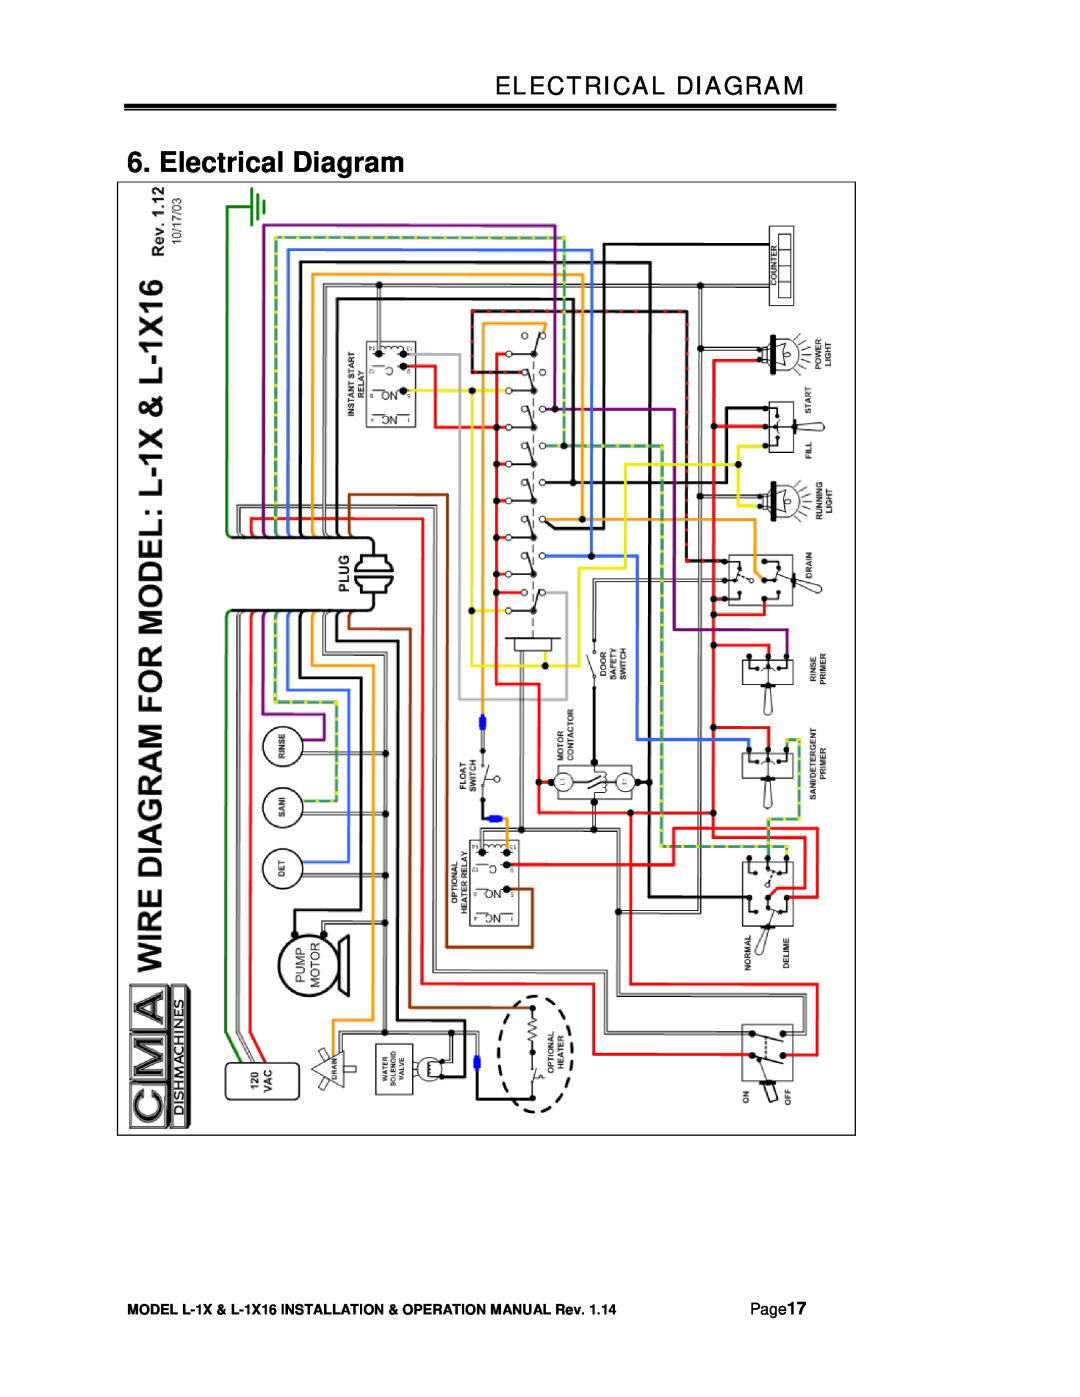 CMA Dishmachines L-1X16 manual Electrical Diagram, Page17 